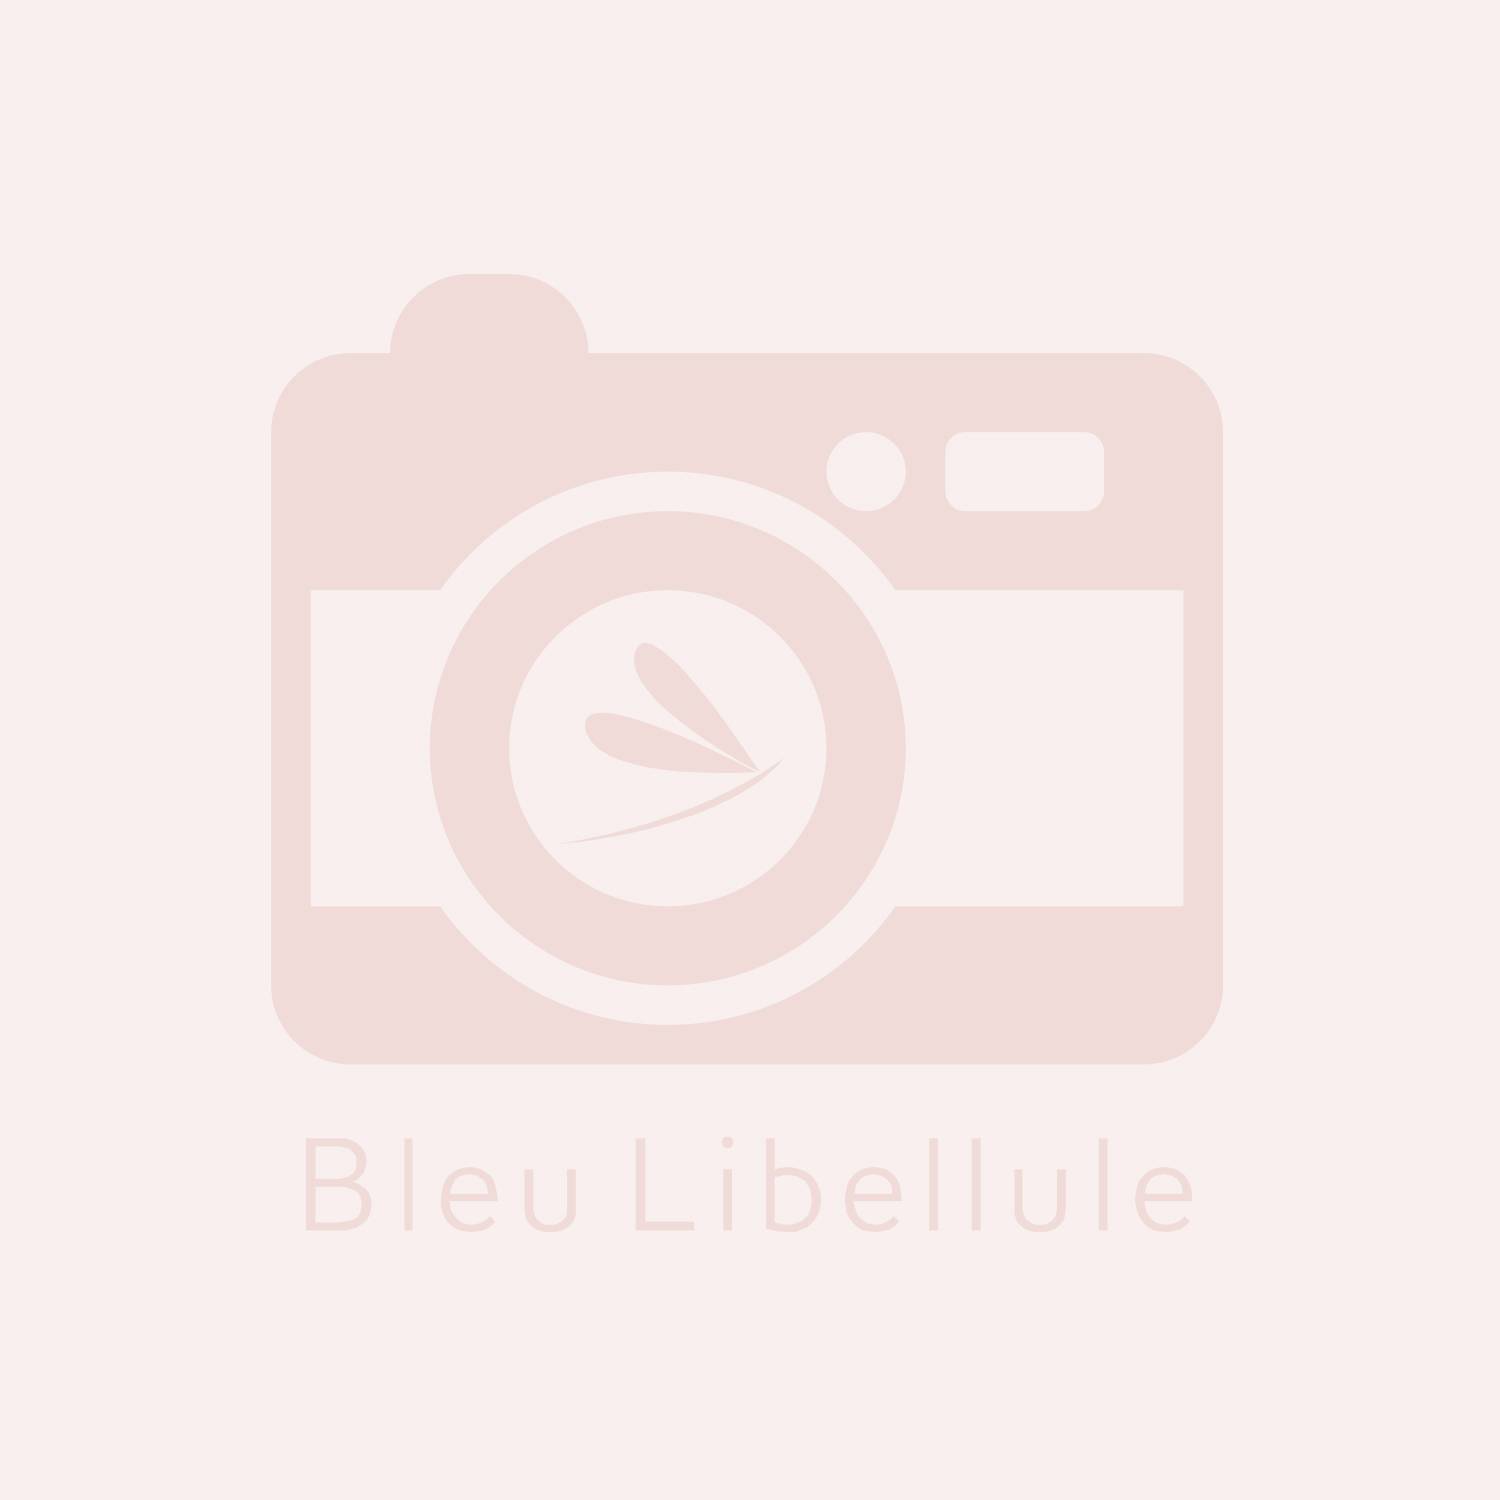 Bleu Libellule Eau de parfum Glamour spray 15ml, Femme